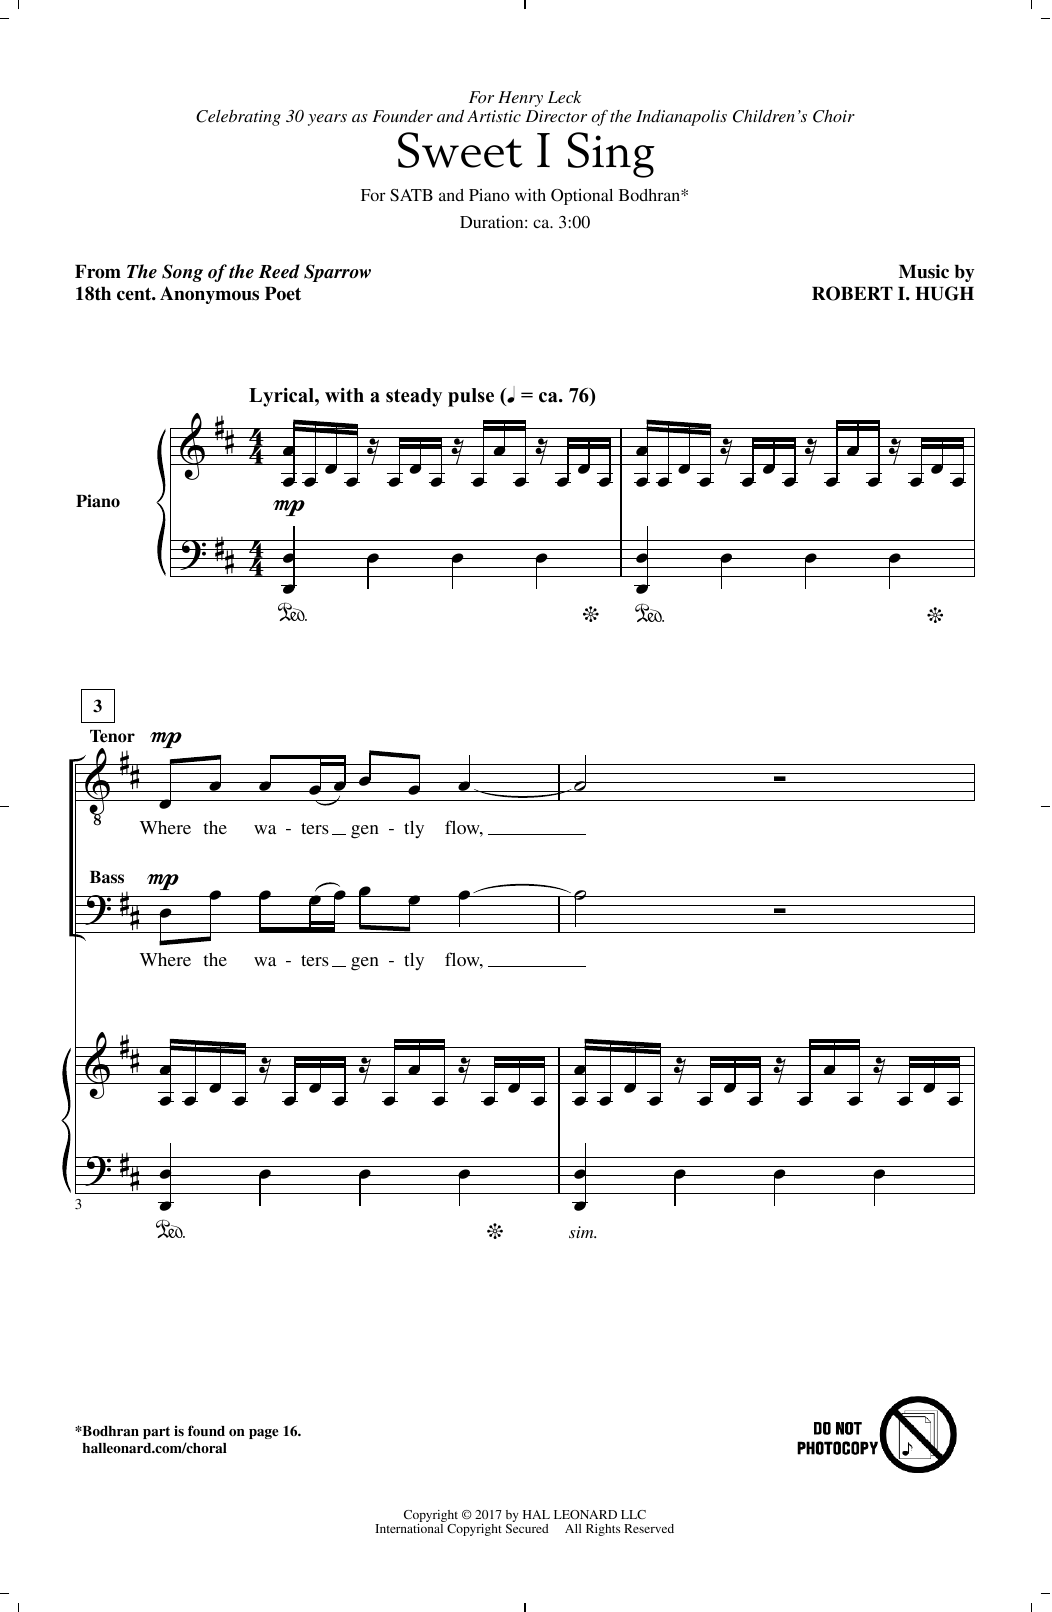 Robert I. Hugh Sweet I Sing Sheet Music Notes & Chords for SATB - Download or Print PDF